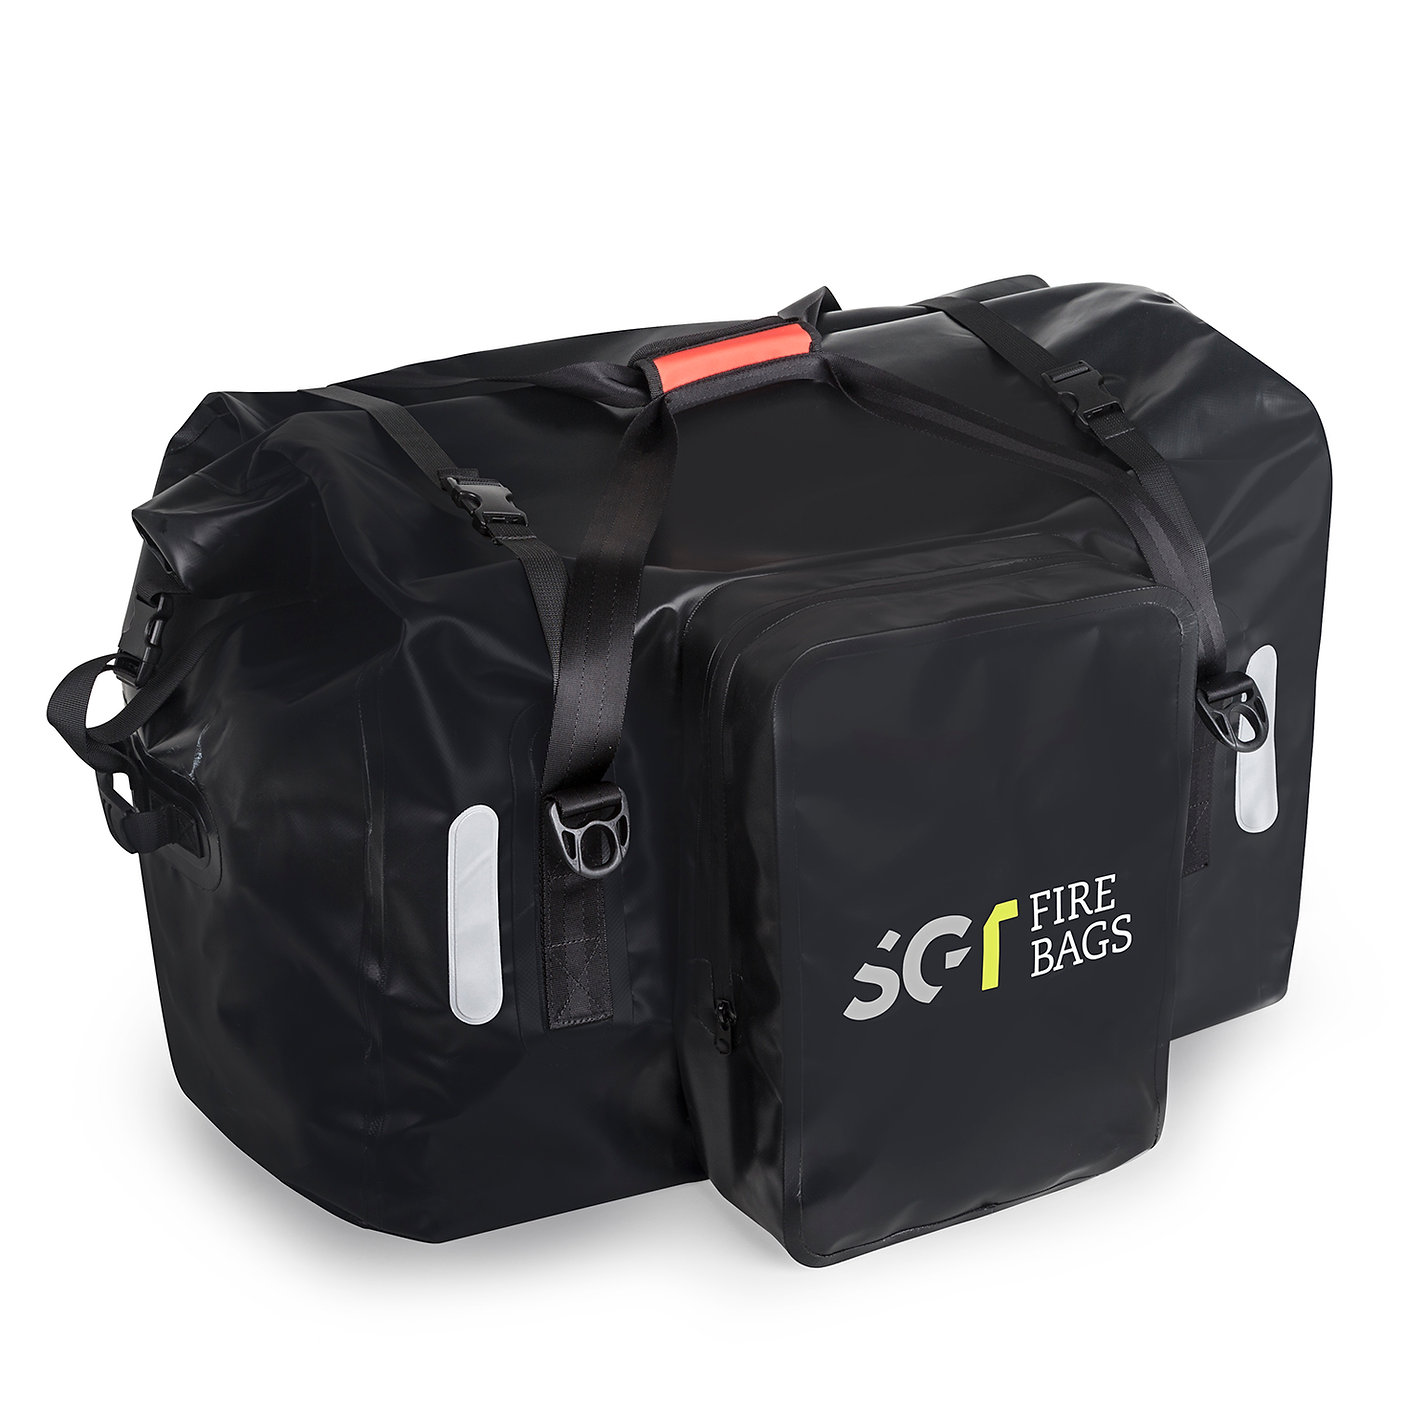 SGT Fire Delta Bravo Turnout Gear Bag